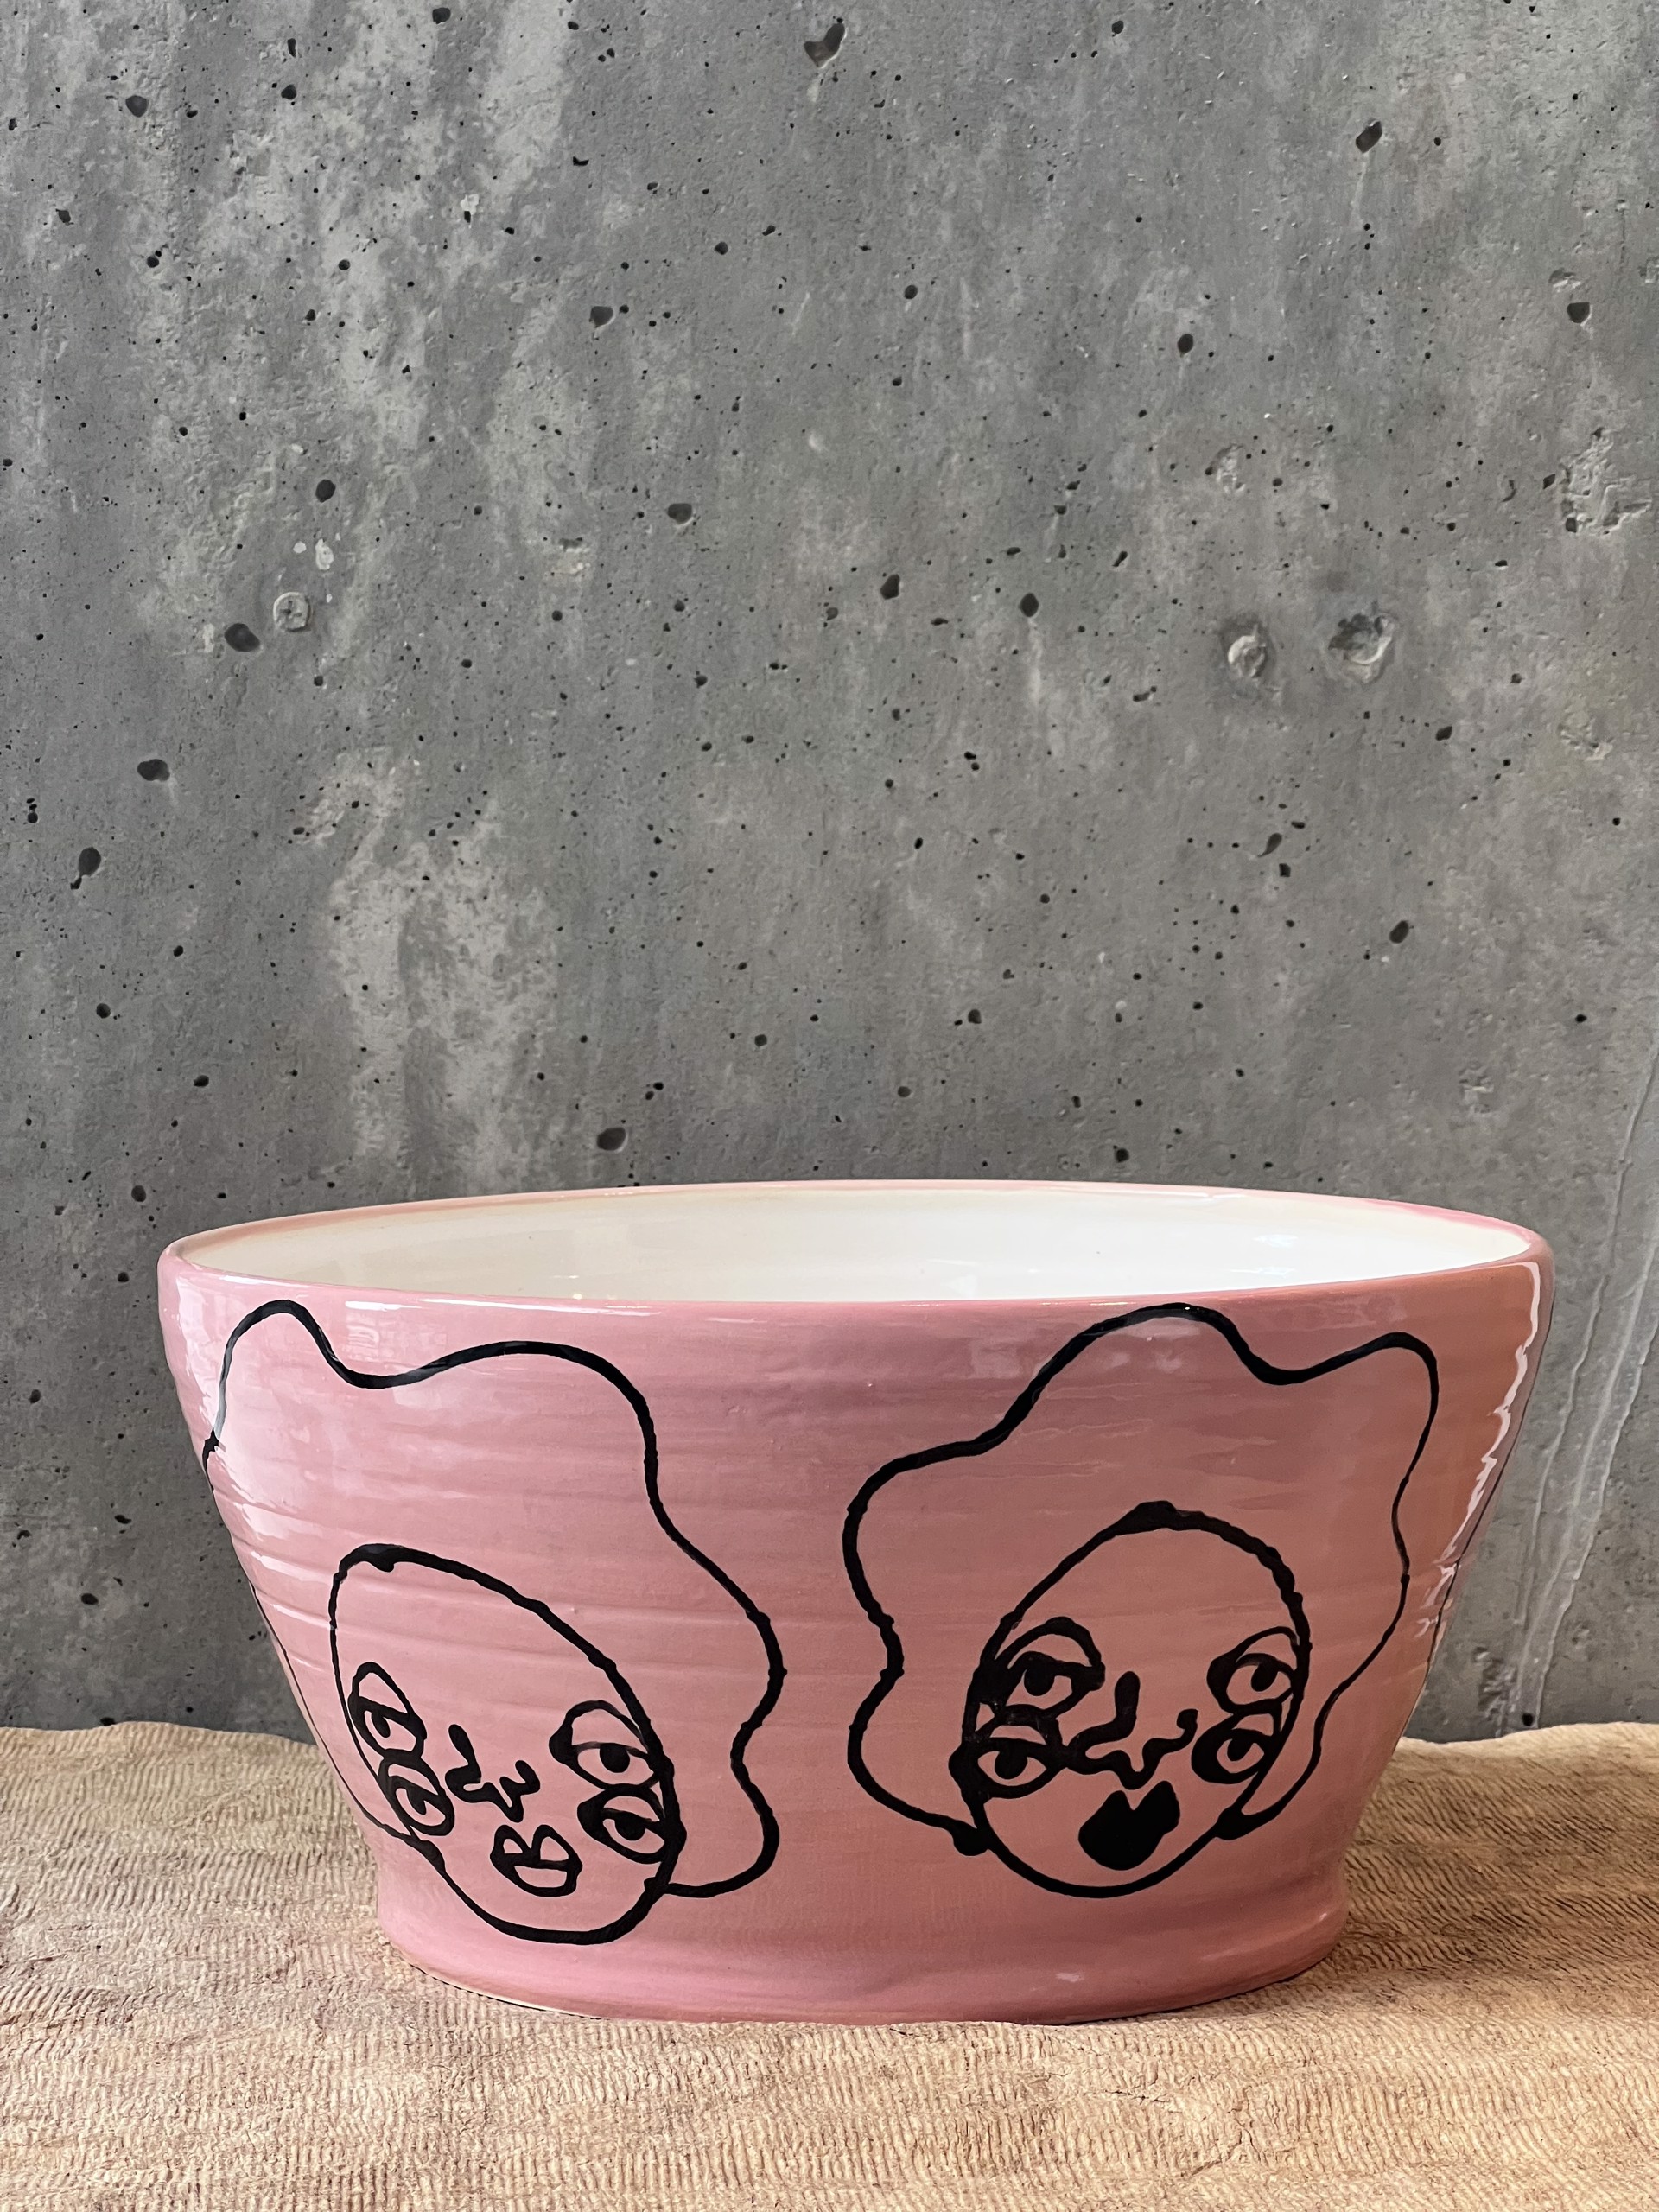 Lady Hummel Pink Bowl by Sarah Hummel Jones